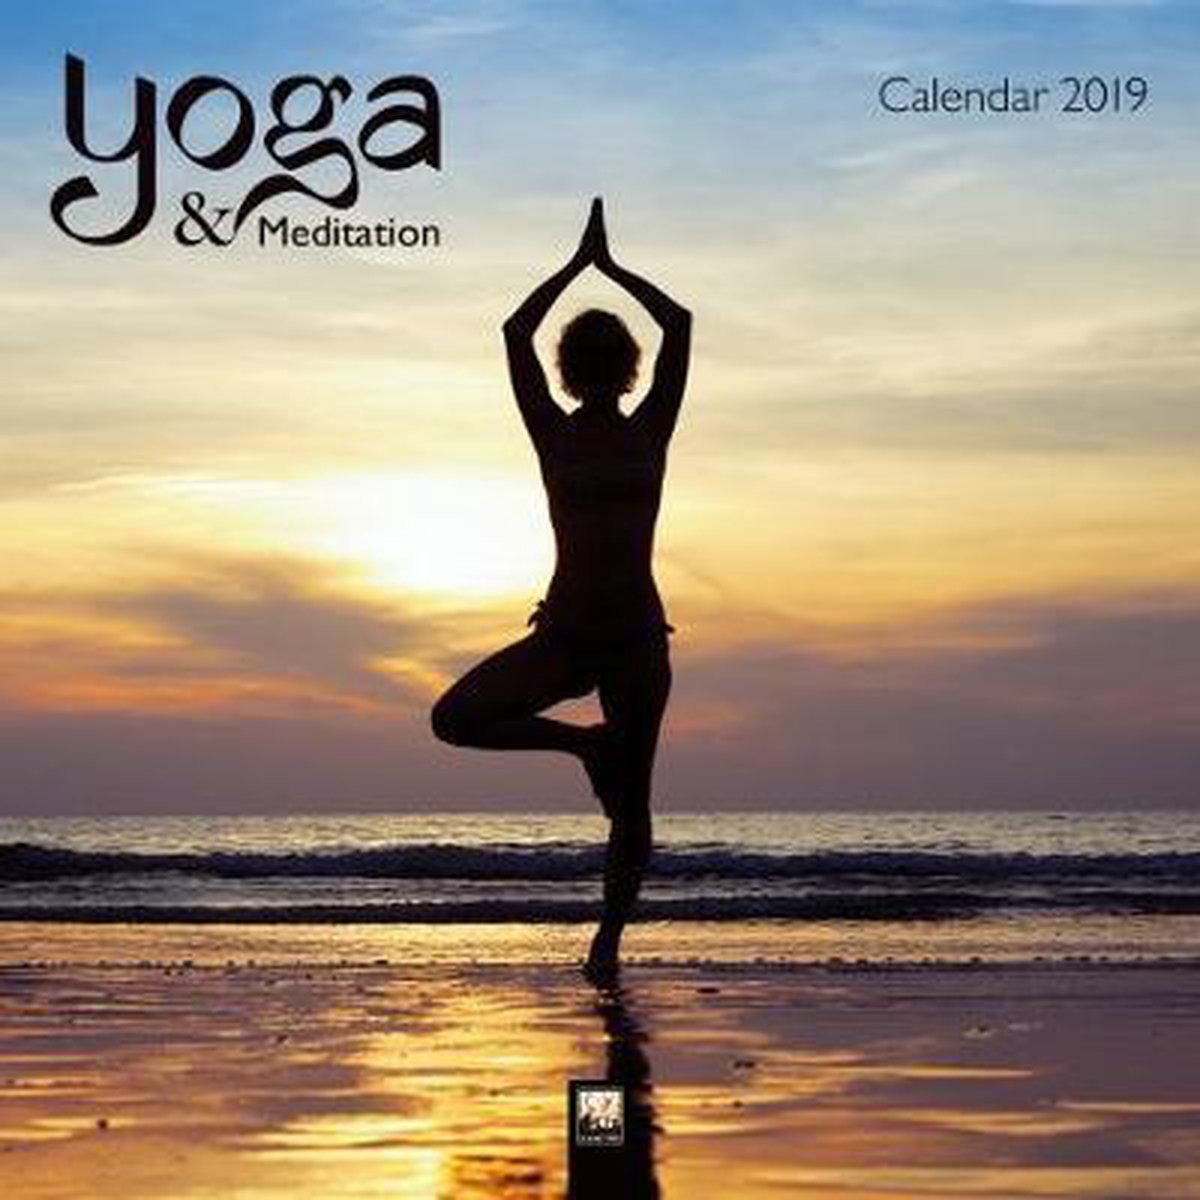 Yoga & Meditation 2019 - Flame Tree